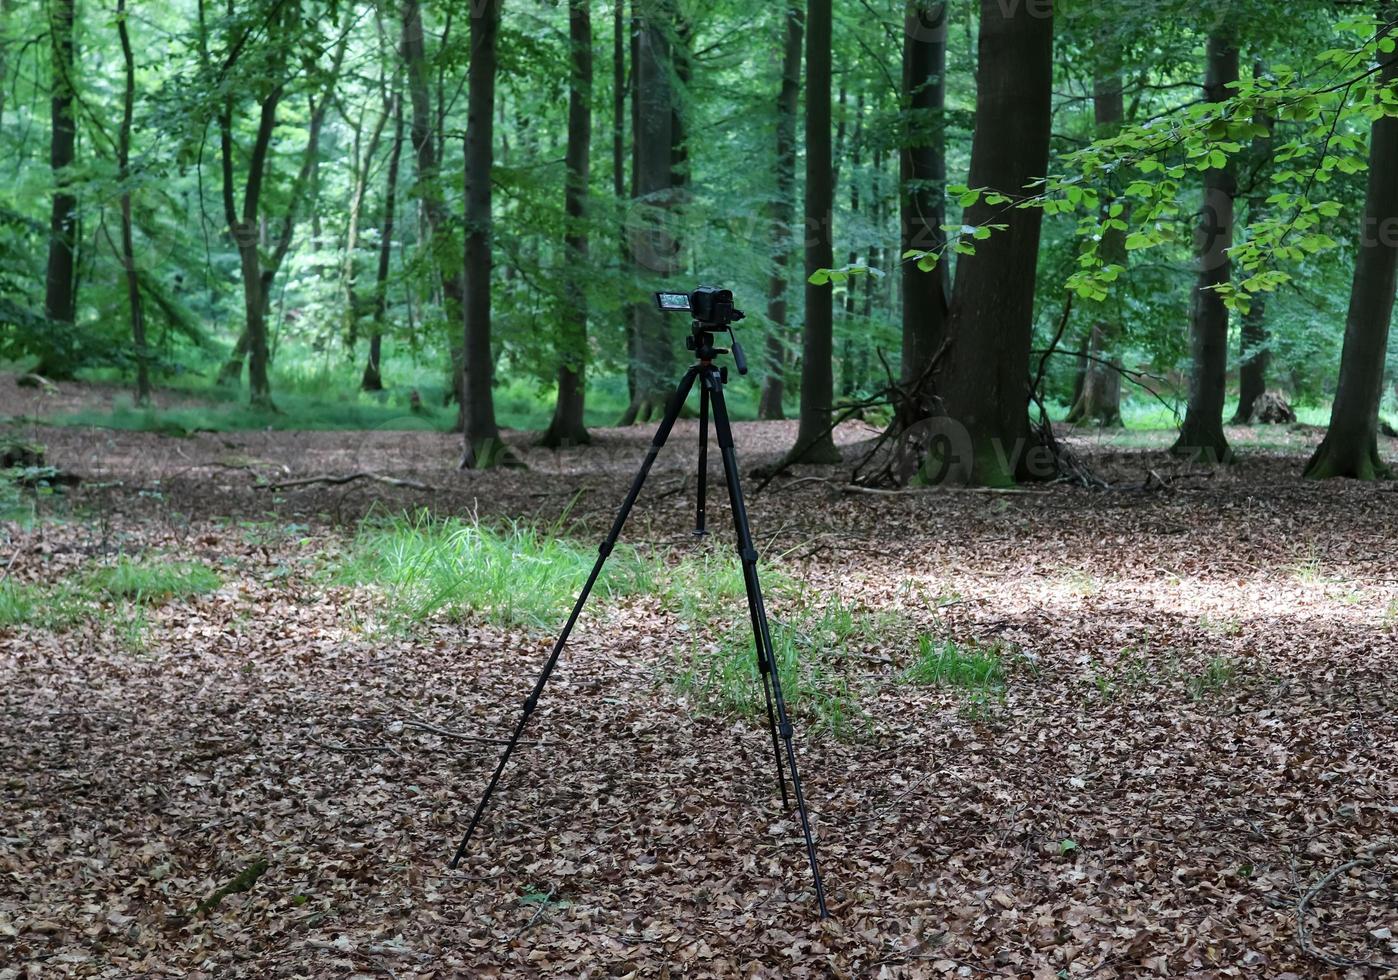 kamera på en stativ stående i en skog med Nej synlig människor foto